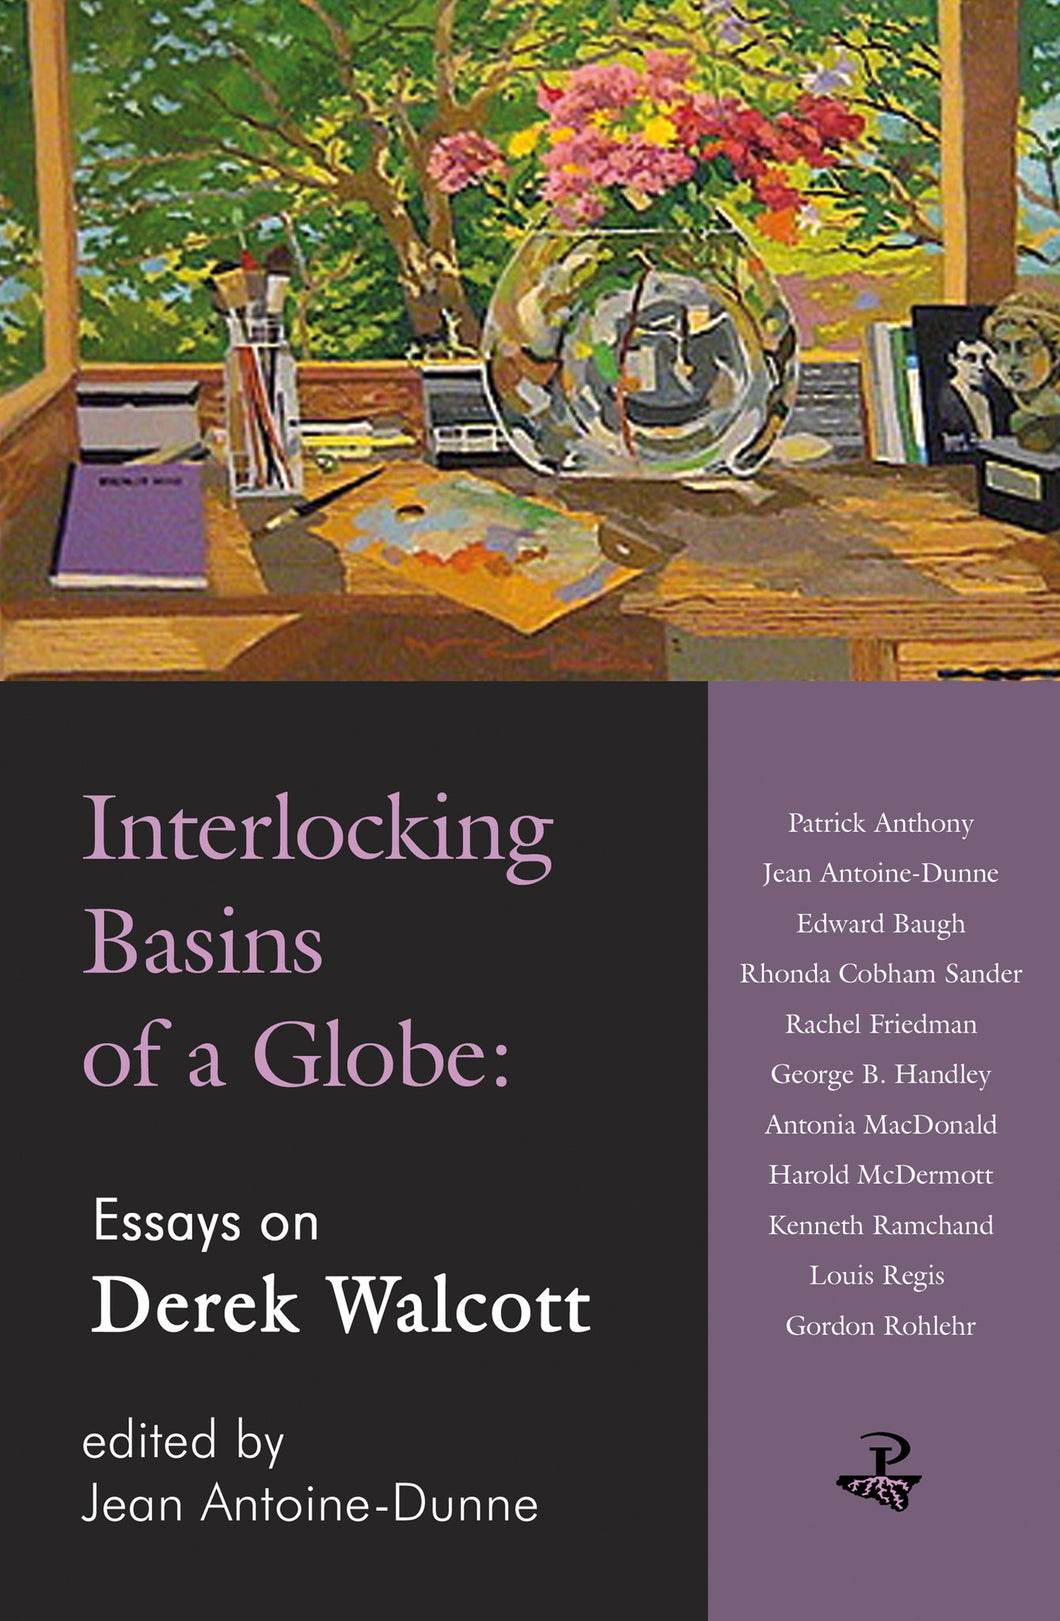 Interlocking Basins of a Globe: Essays on Derek Walcott